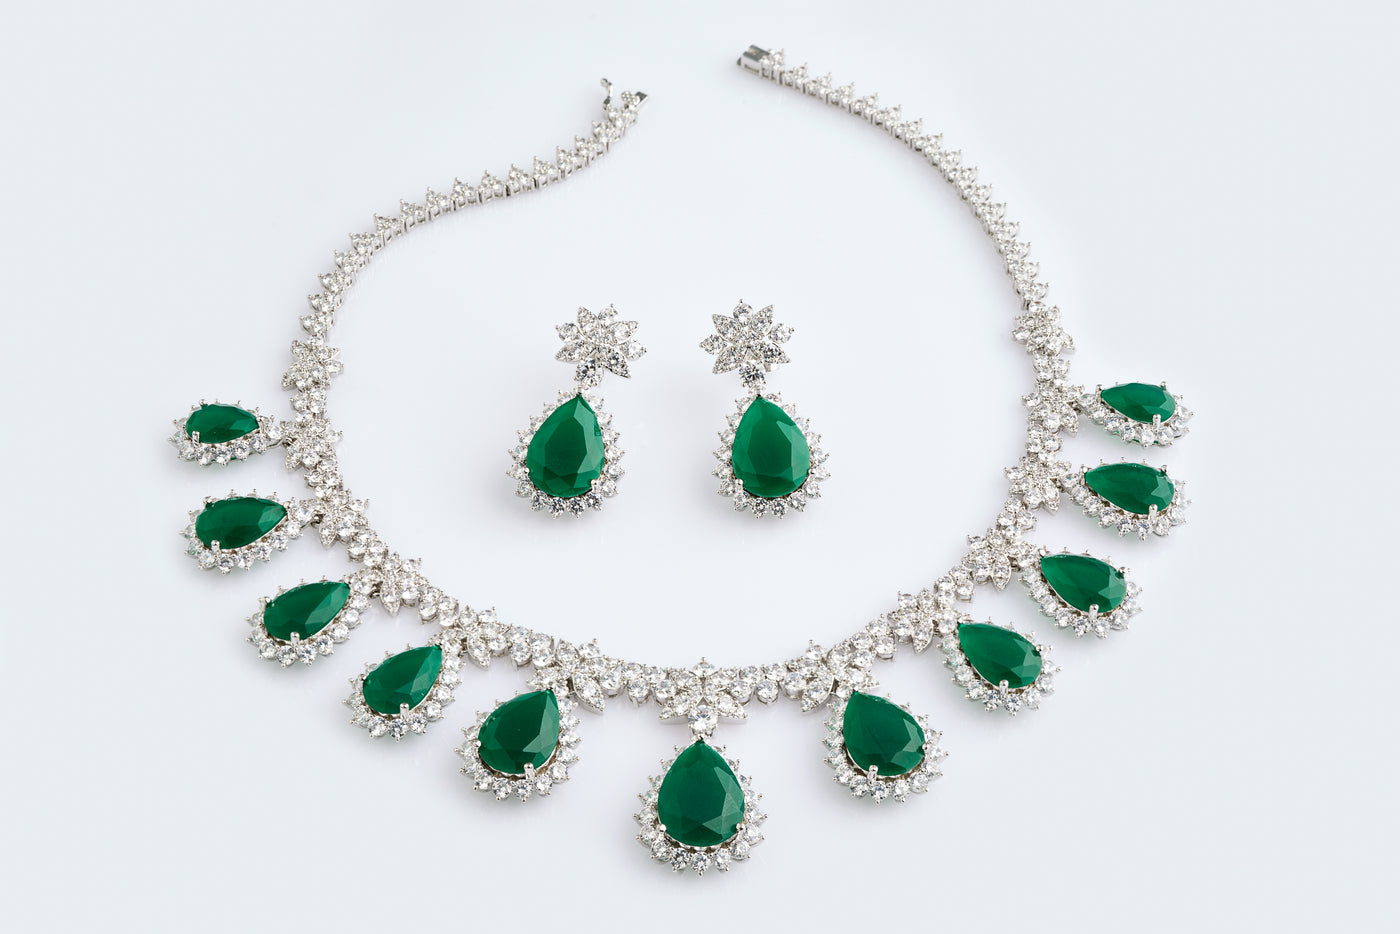 The Roja necklace set